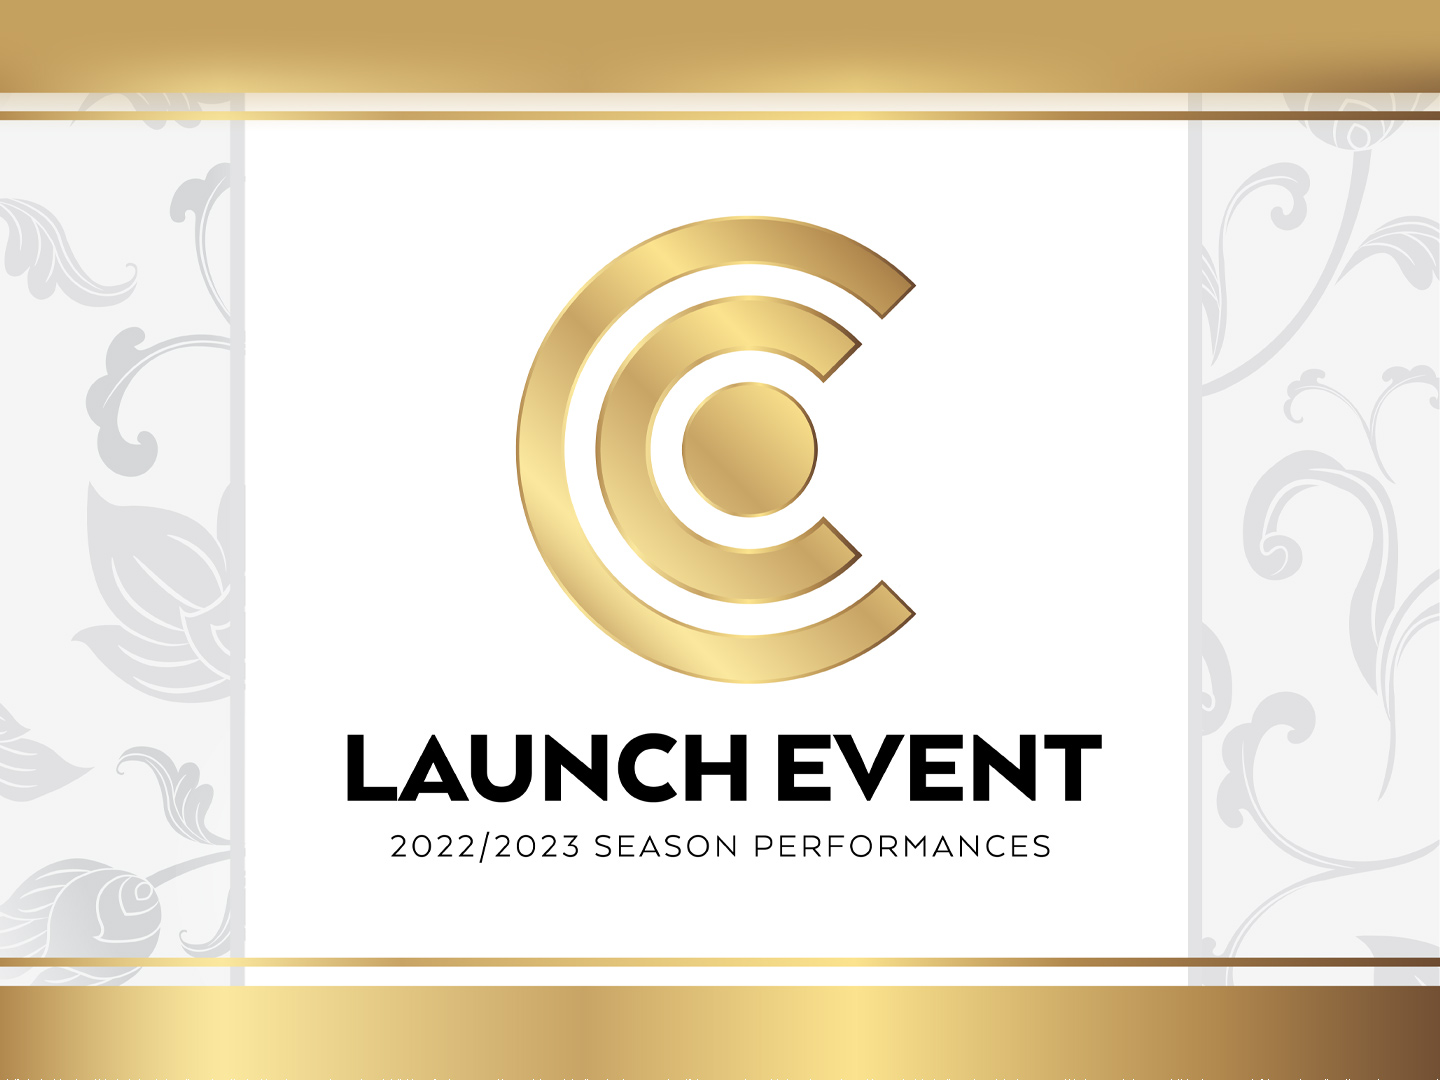 Season Launch Event - 2022/23